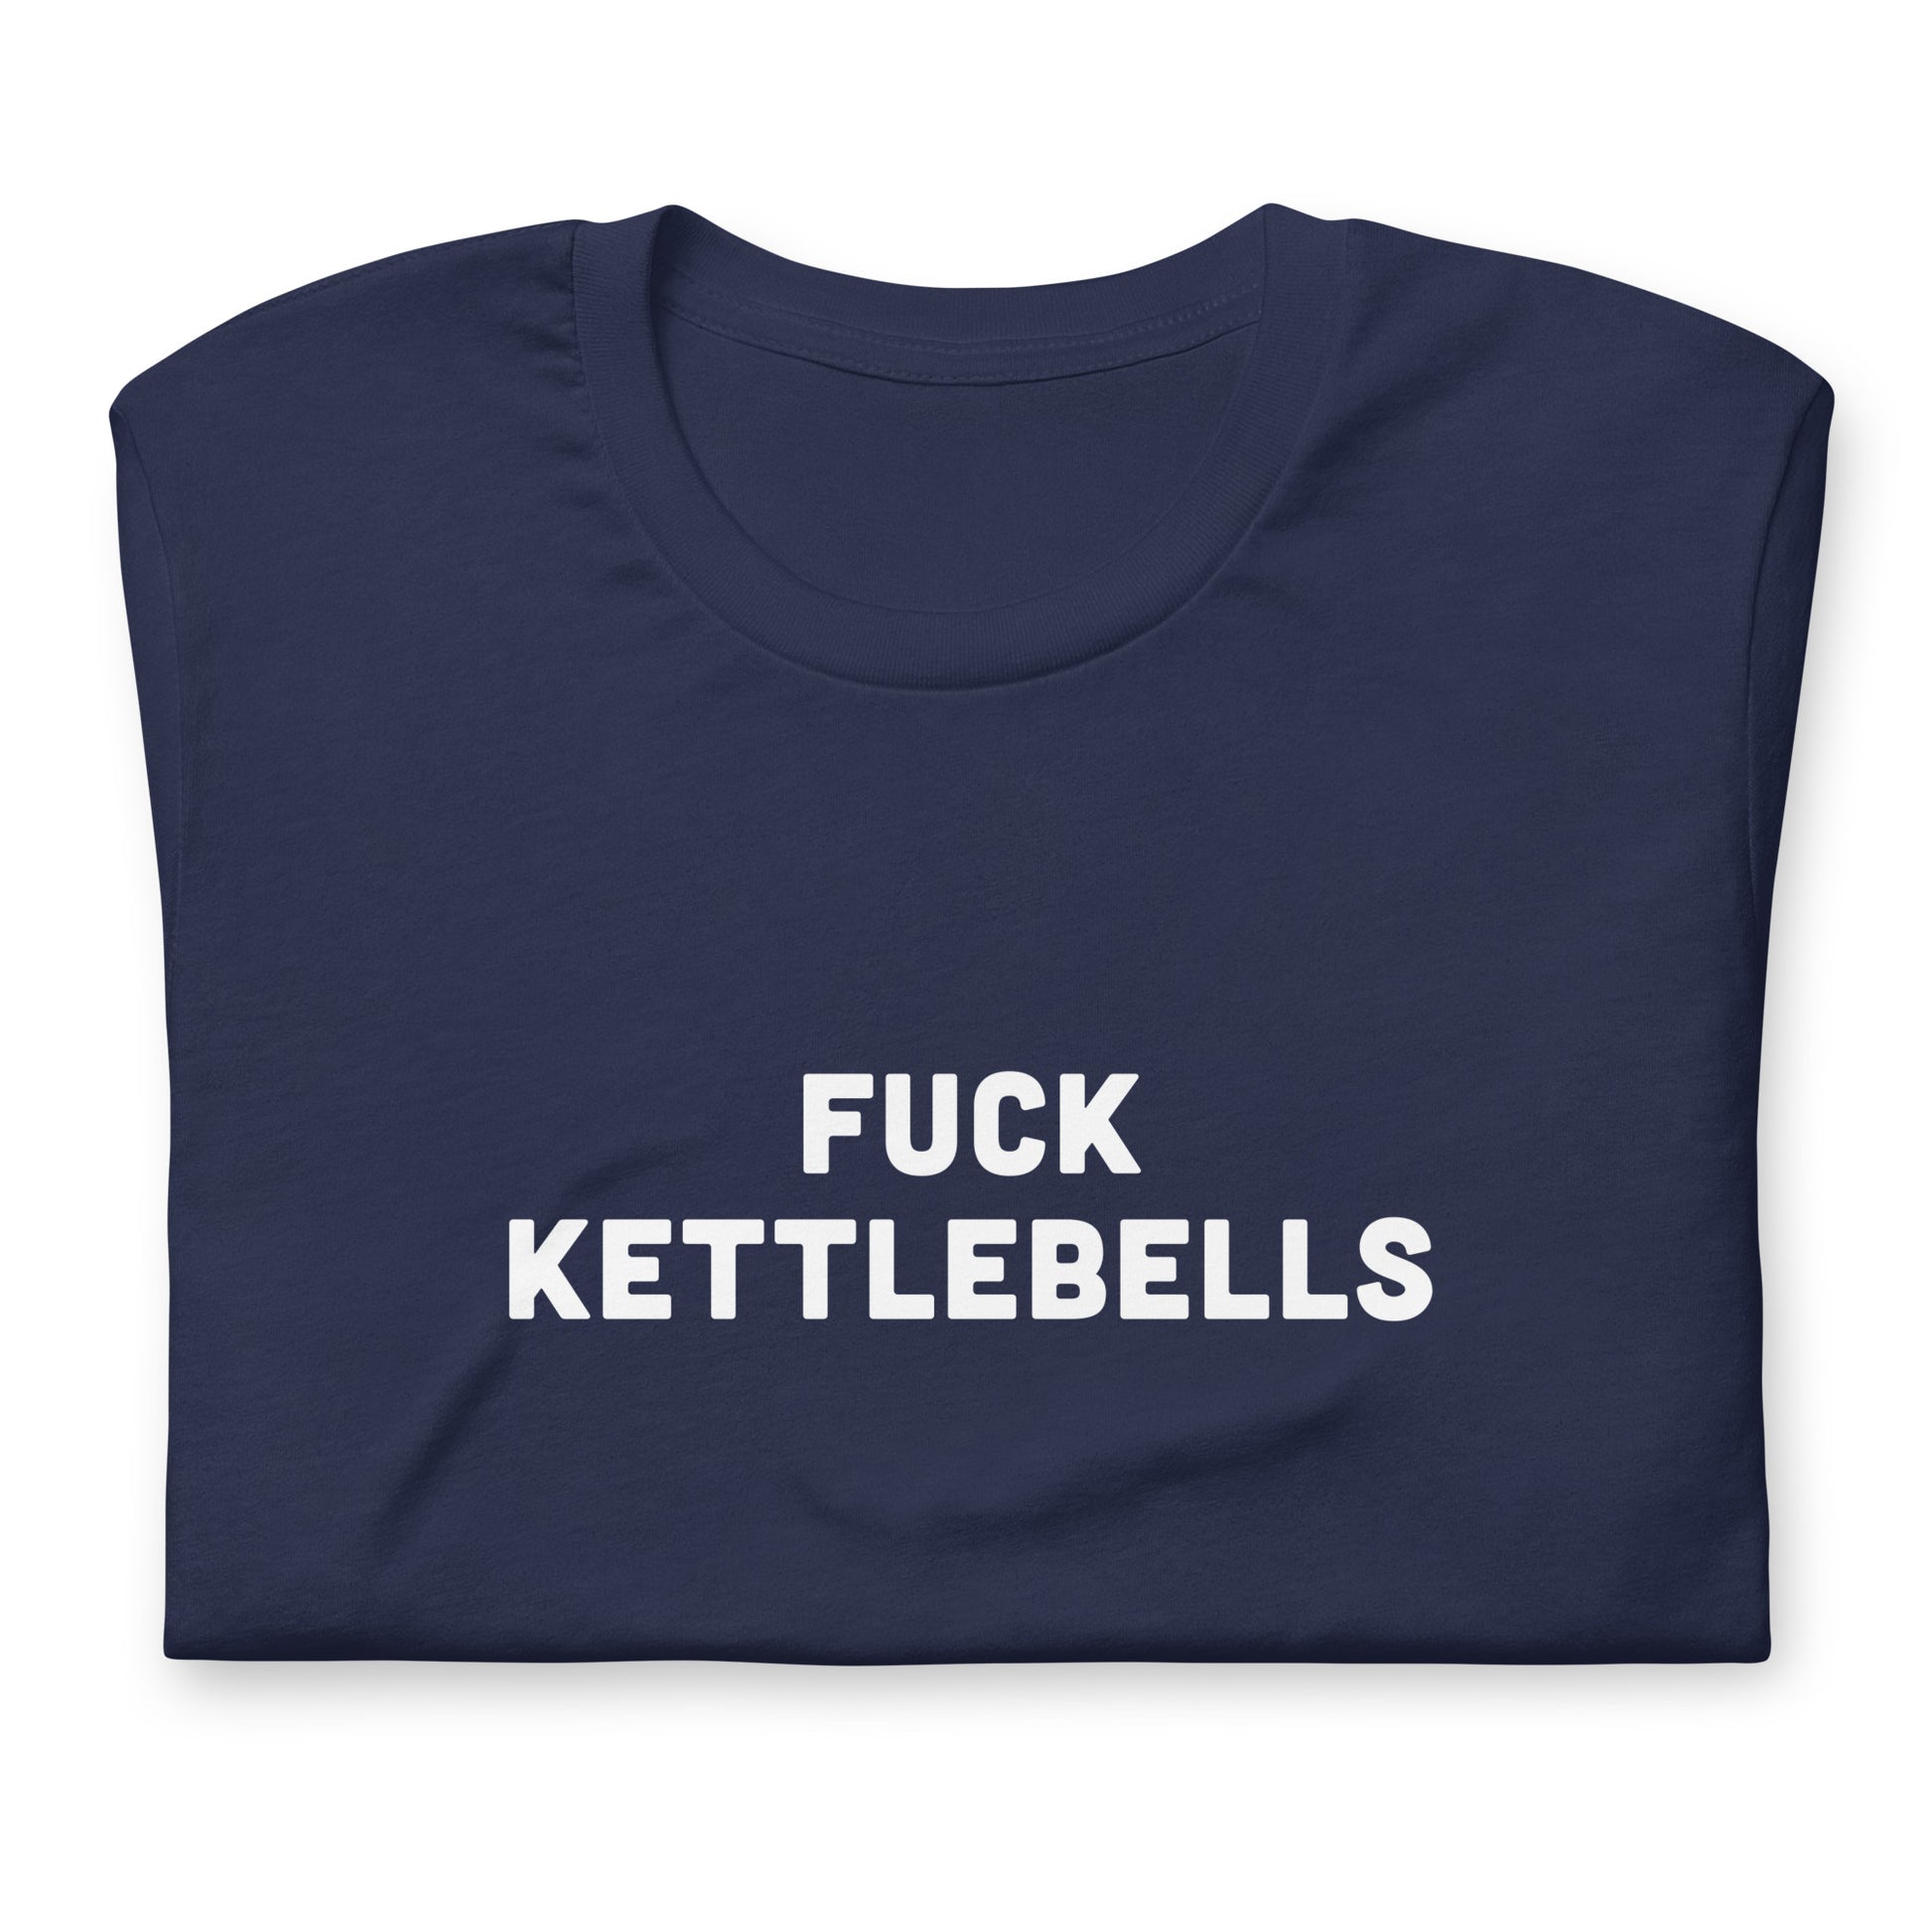 Fuck Kettlebells T-Shirt Size L Color Black